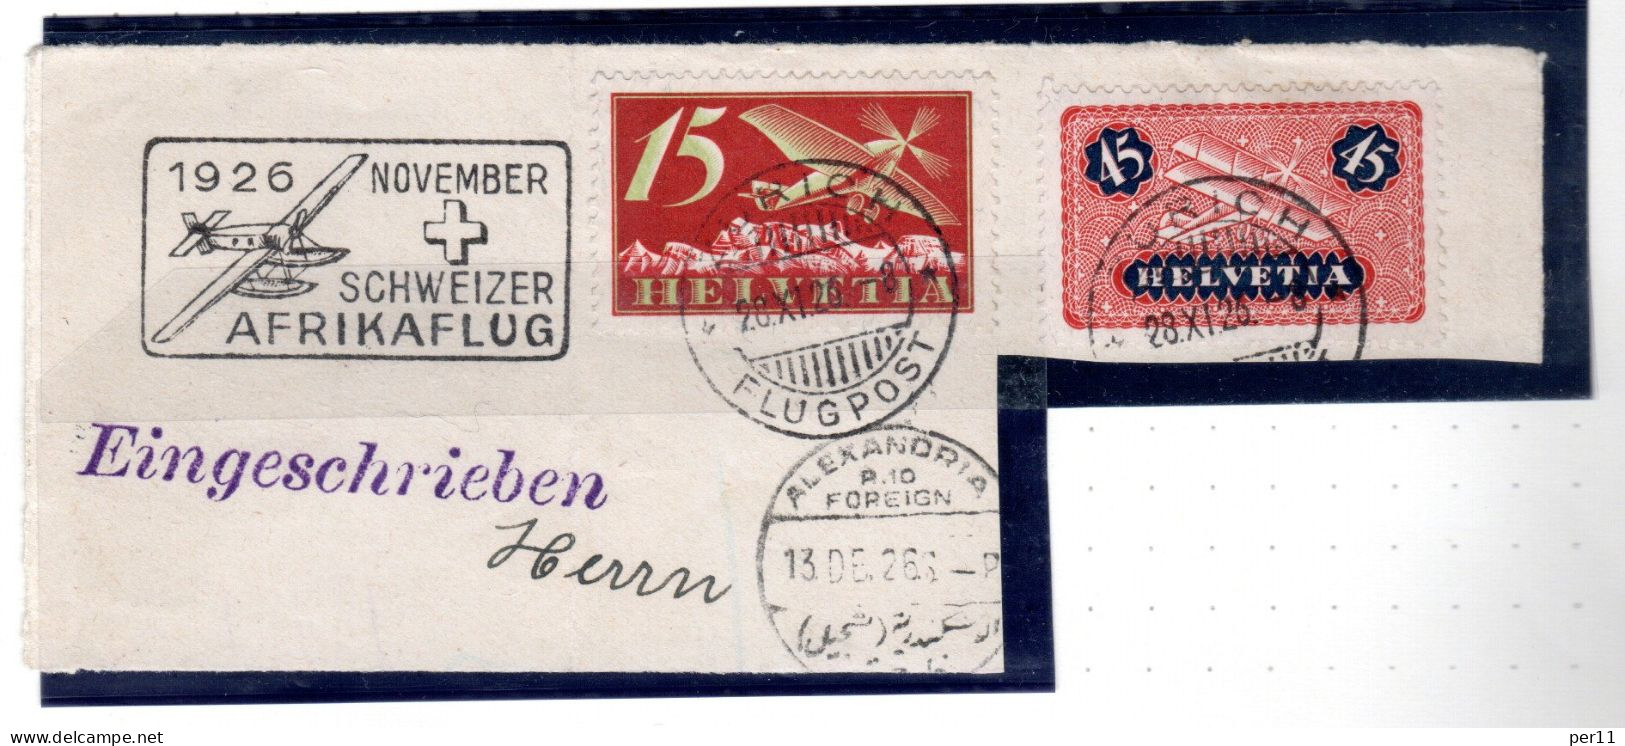 1926 November Afrikaflug , Part Of Registered Letter  (ch395) - Gebruikt